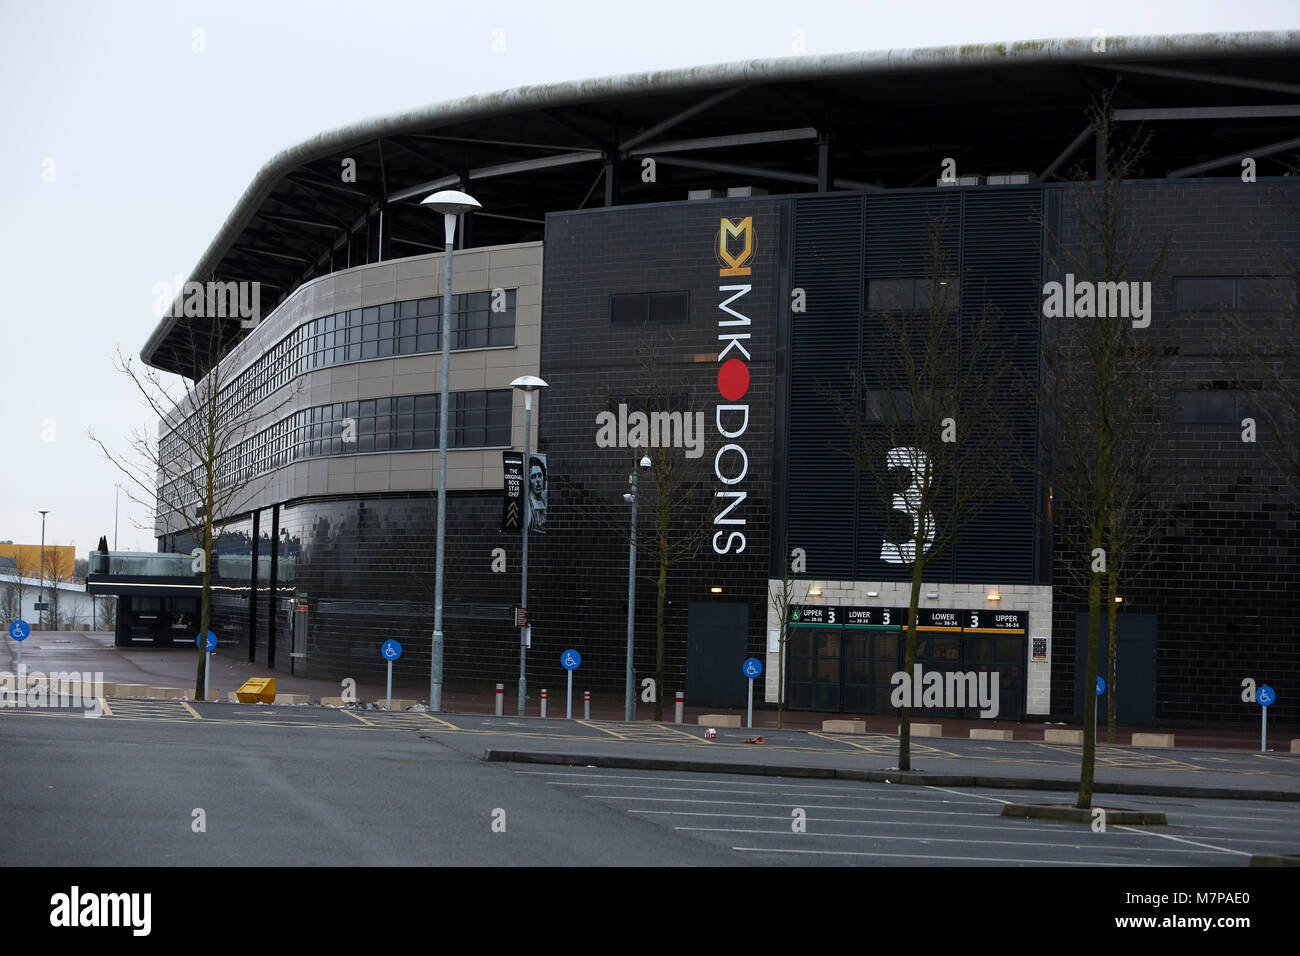 General views of the Milton Keynes Football Stadium, MK Dons, UK. Stock Photo